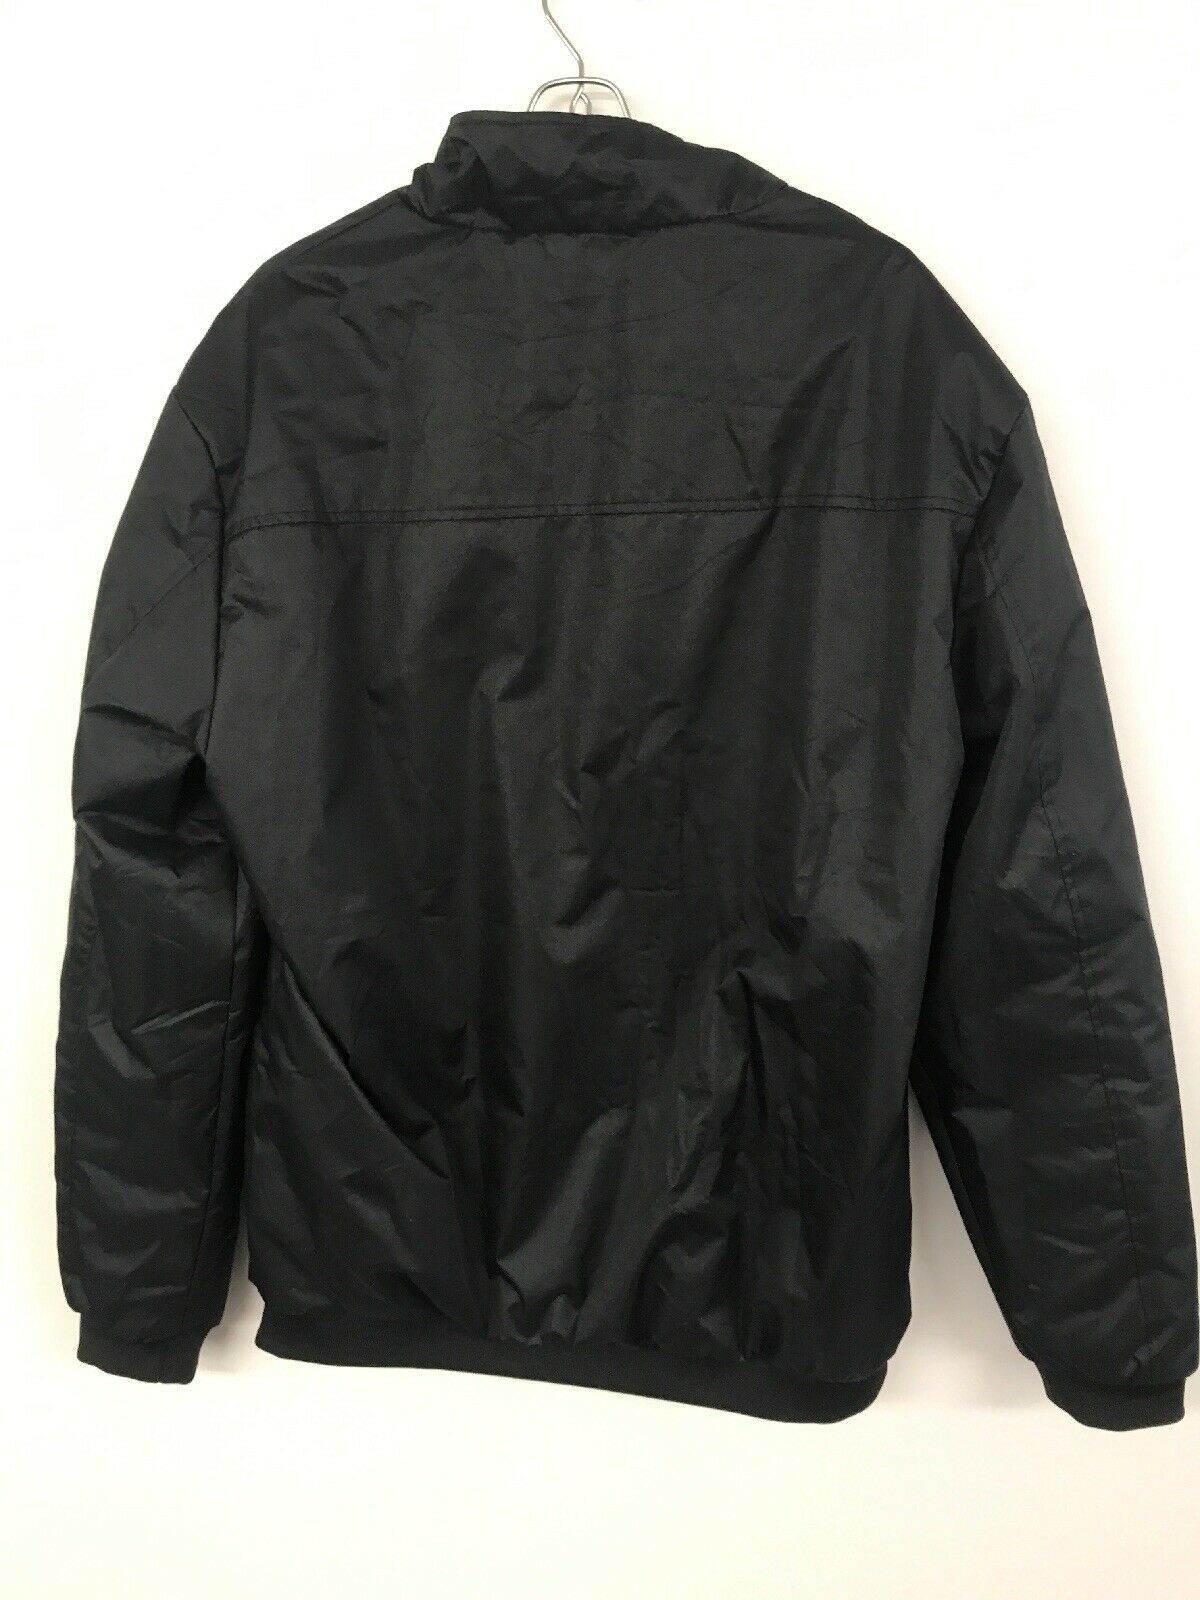 Omoone Men’s Soft Inside Jacket, Black, Large - Coats & Jackets